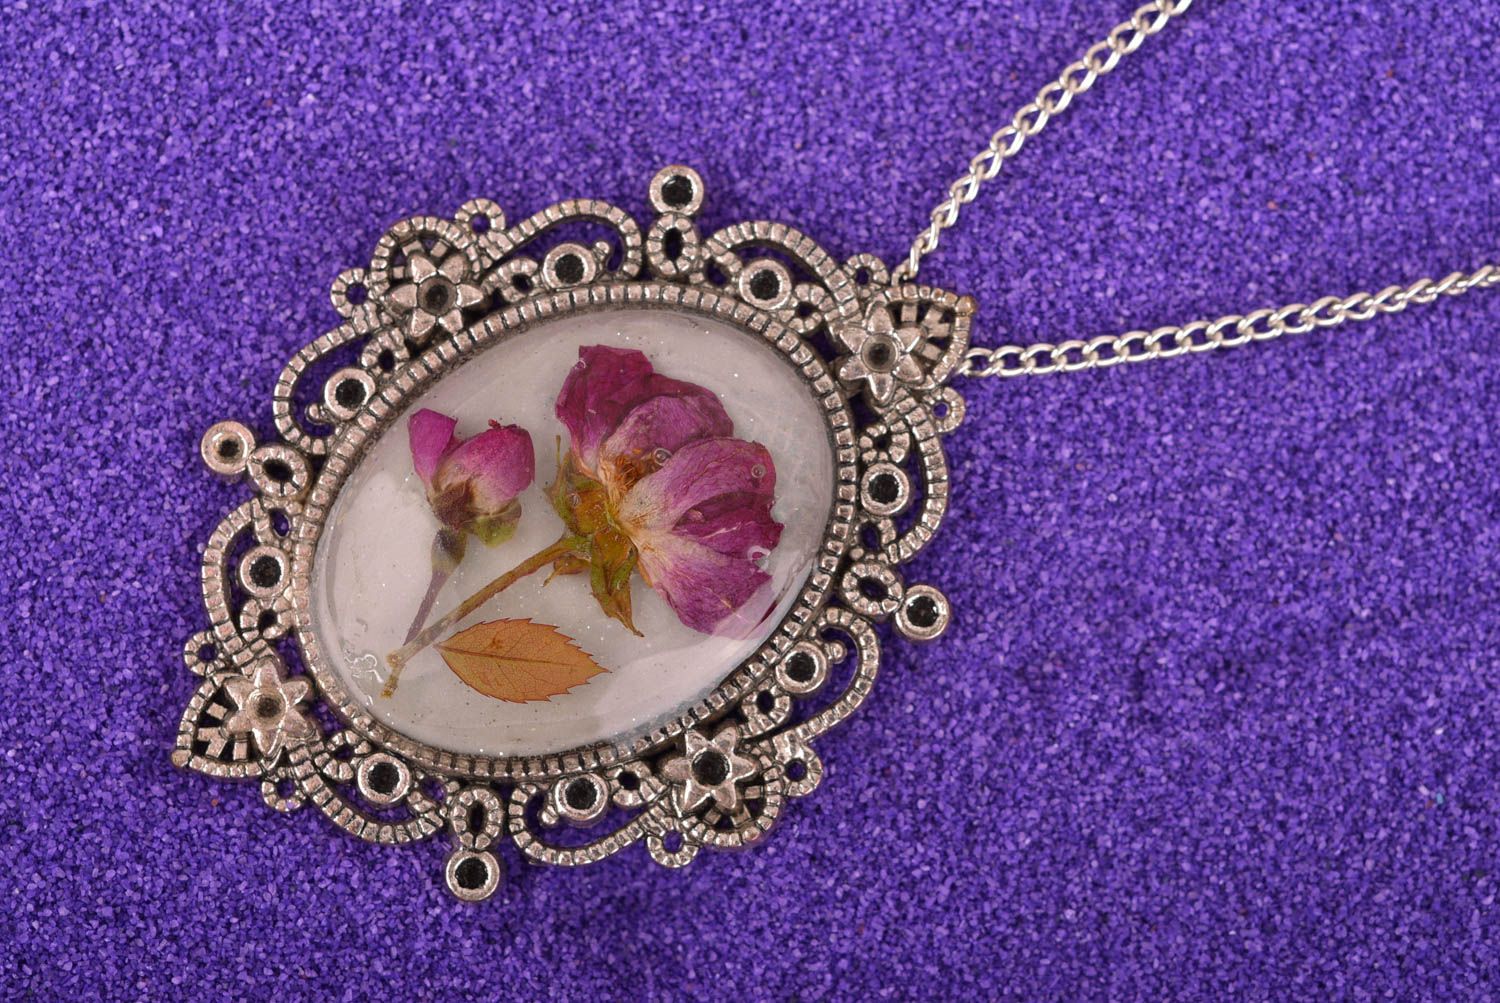 Handmade pendant unusual jewelry designer accessory gift ideas epoxy jewelry photo 1